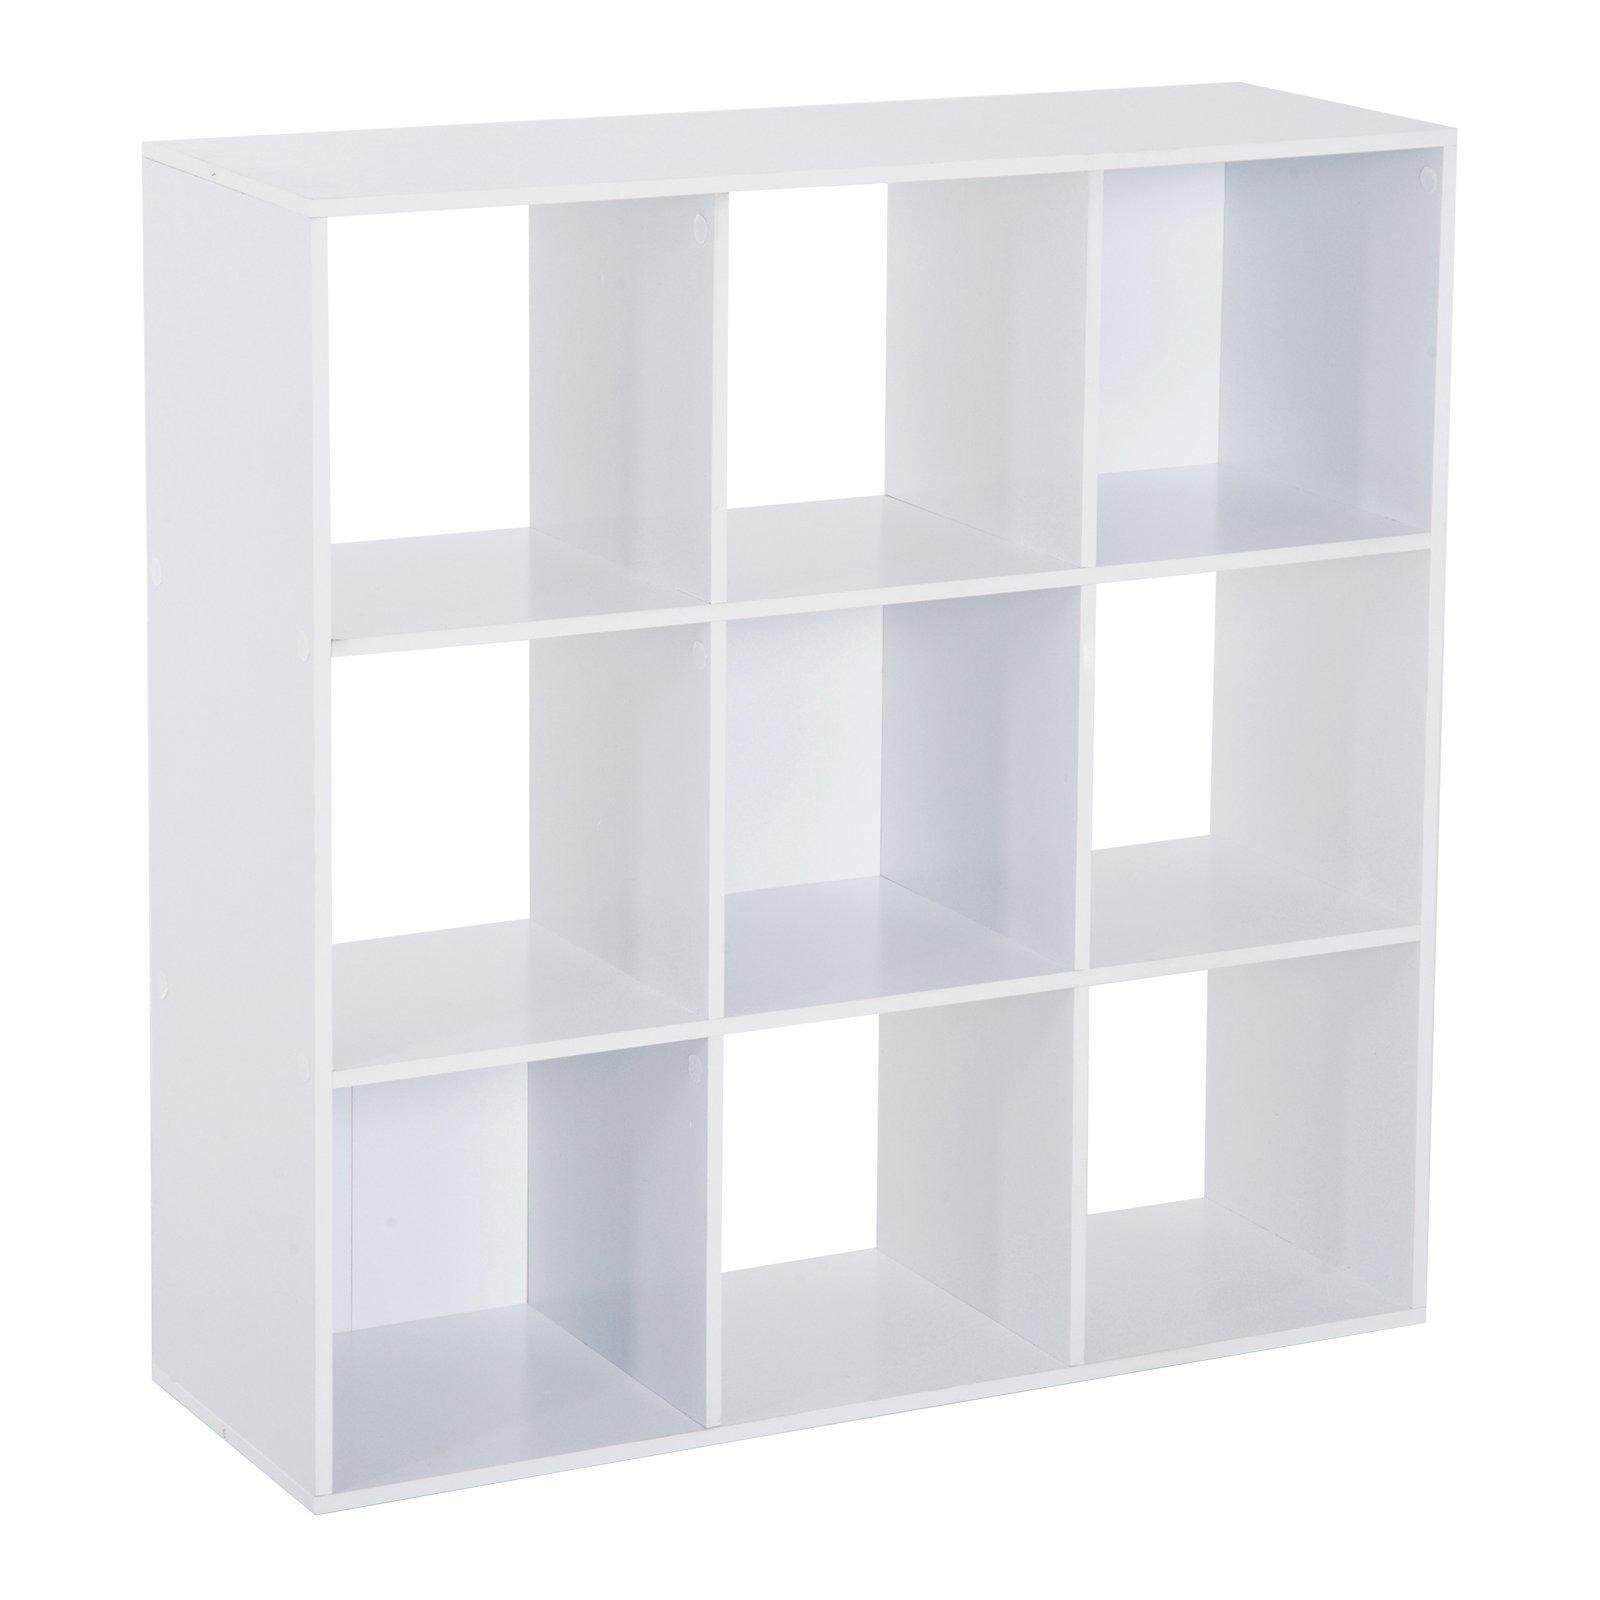 Wooden 9 Cube Storage Cabinet Unit 3 Tier Bookcase Shelves - image 1